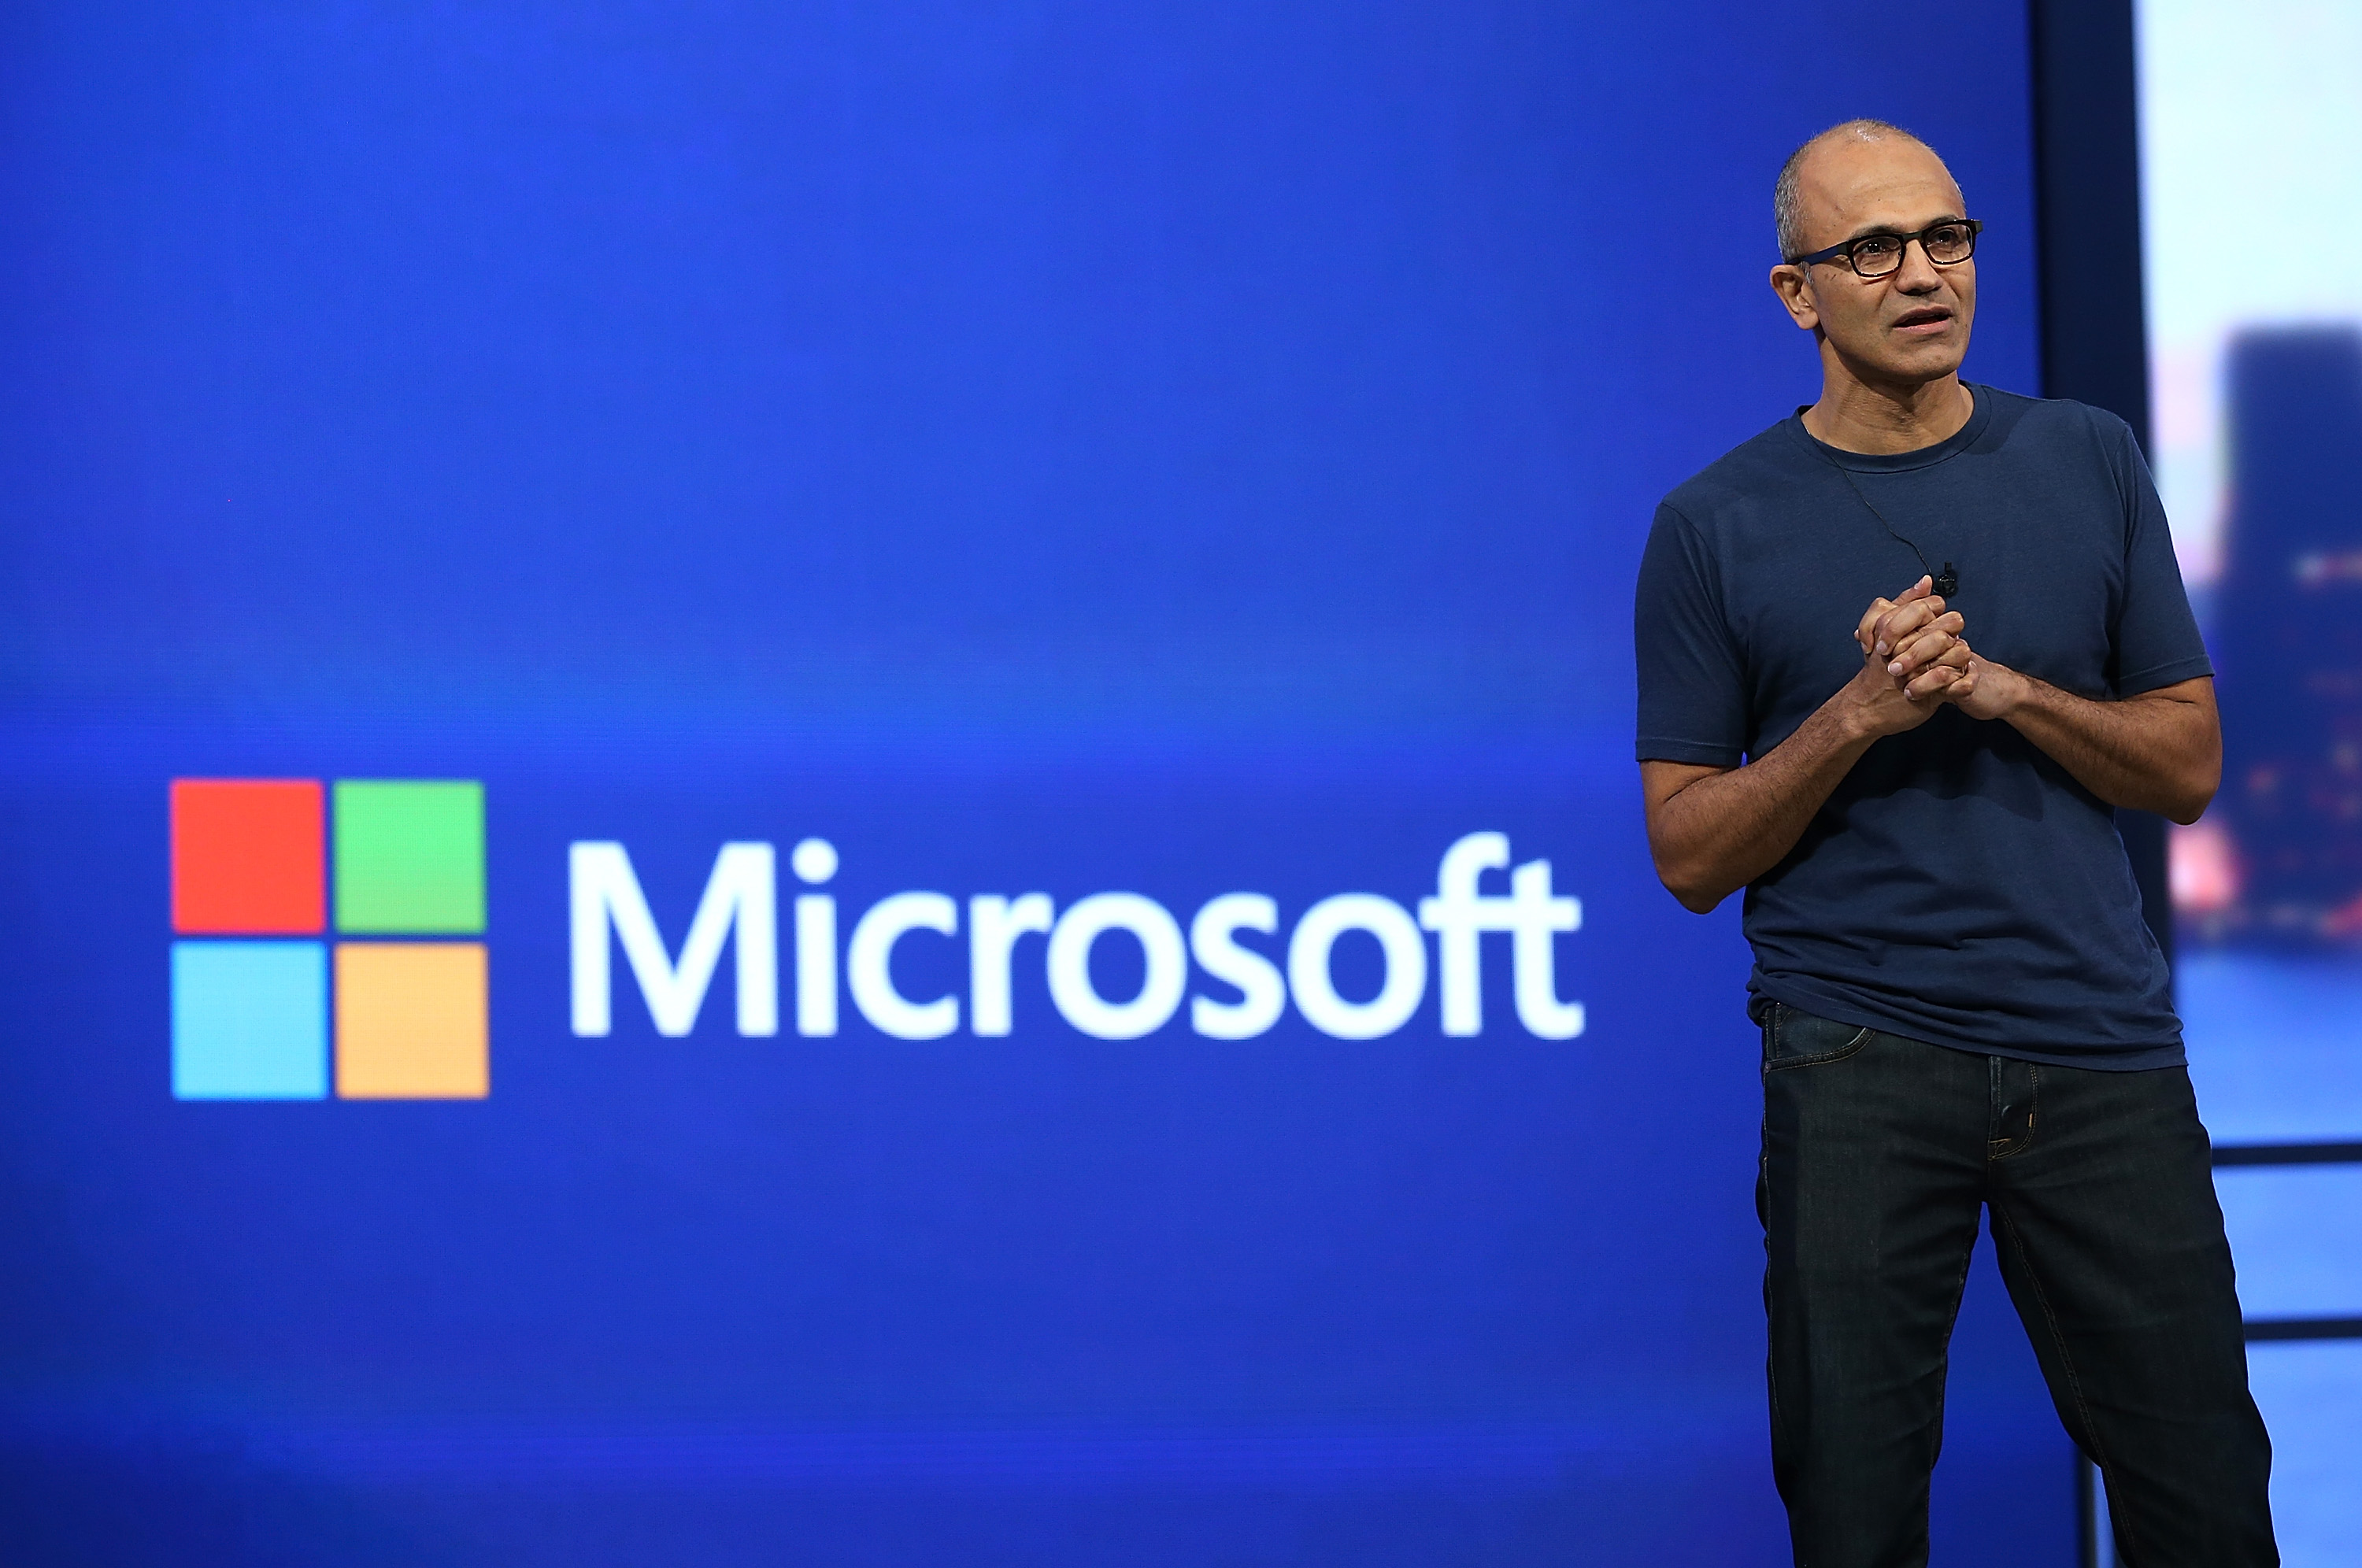 Microsoft CEO Satya Nadella delivers a keynote address during the 2014 Microsoft Build developer conference on April 2, 2014 in San Francisco, California. (Justin Sullivan&mdash;Getty Images)